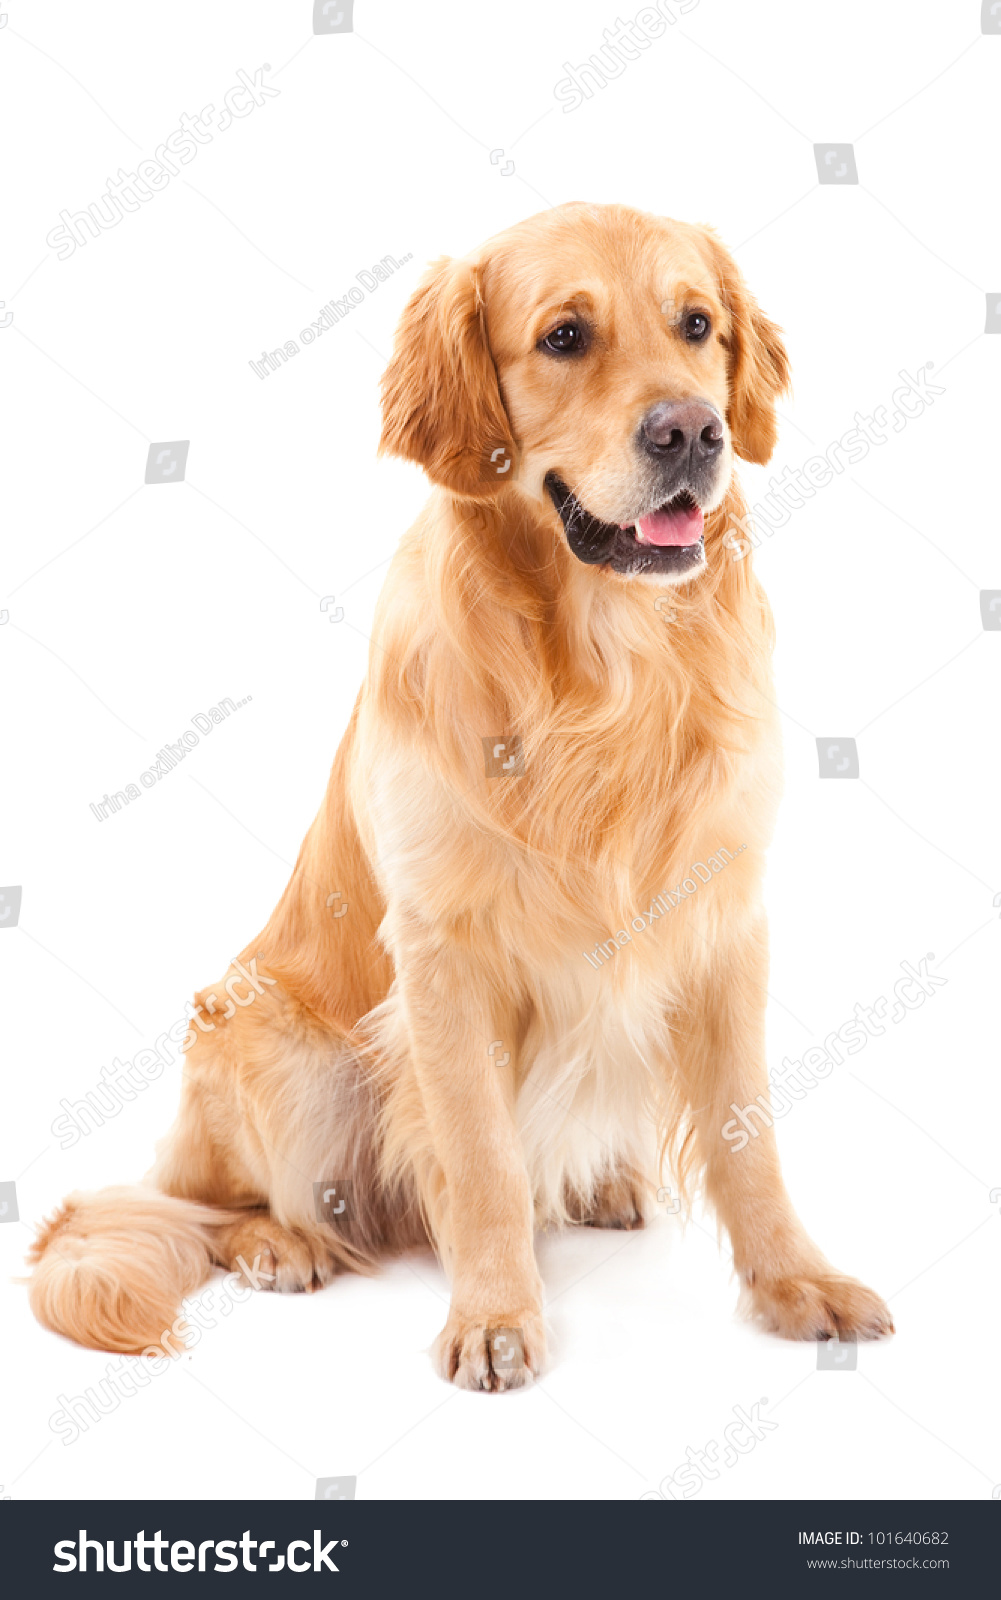 purebred golden retriever dog sitting on isolated  white background #101640682